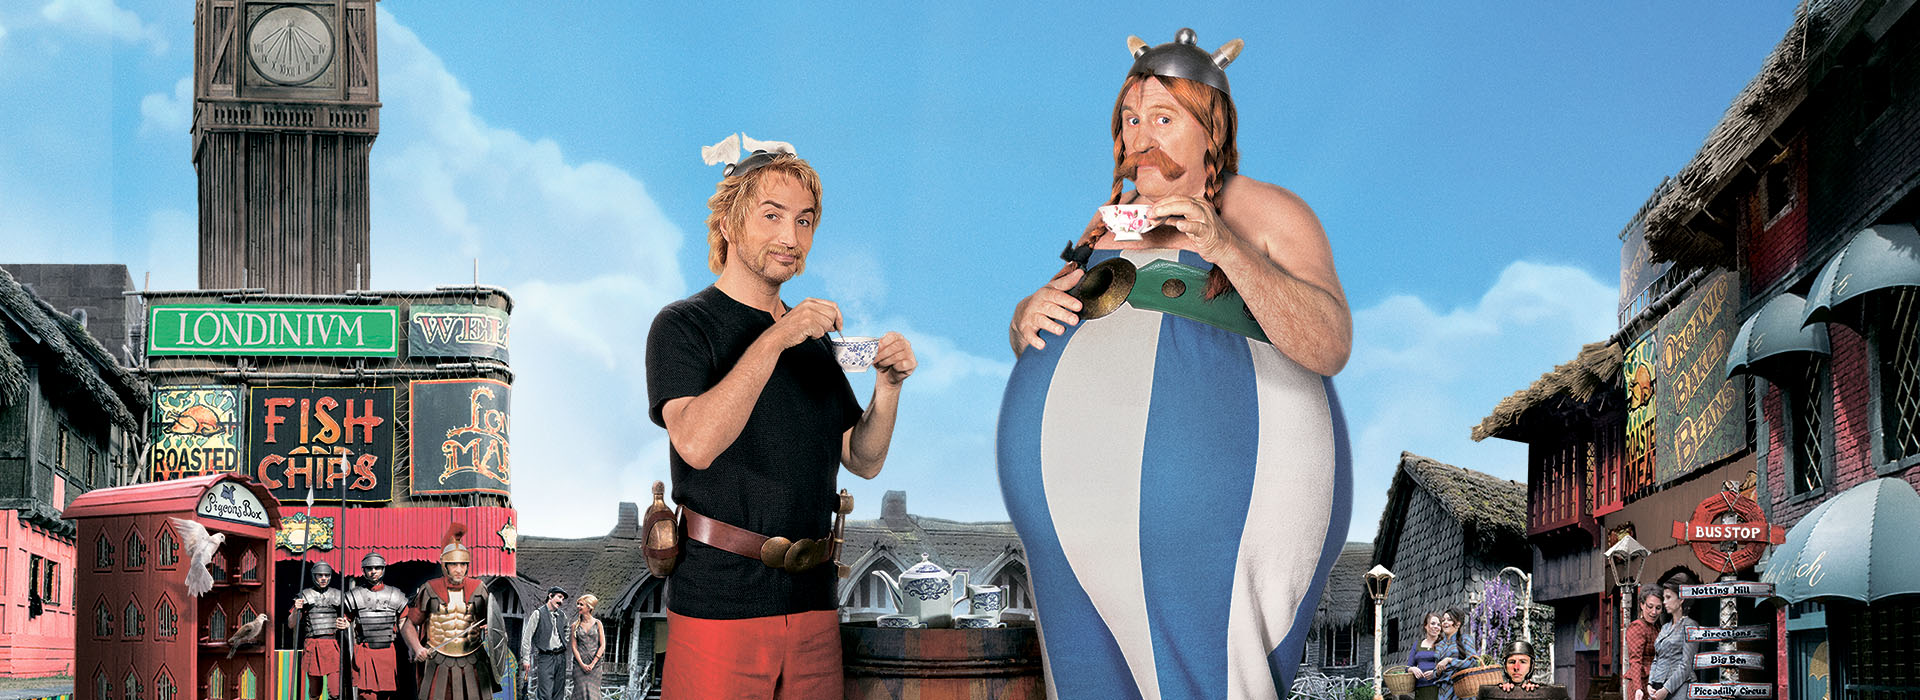 Movie poster Asterix & Obelix: God Save Britannia